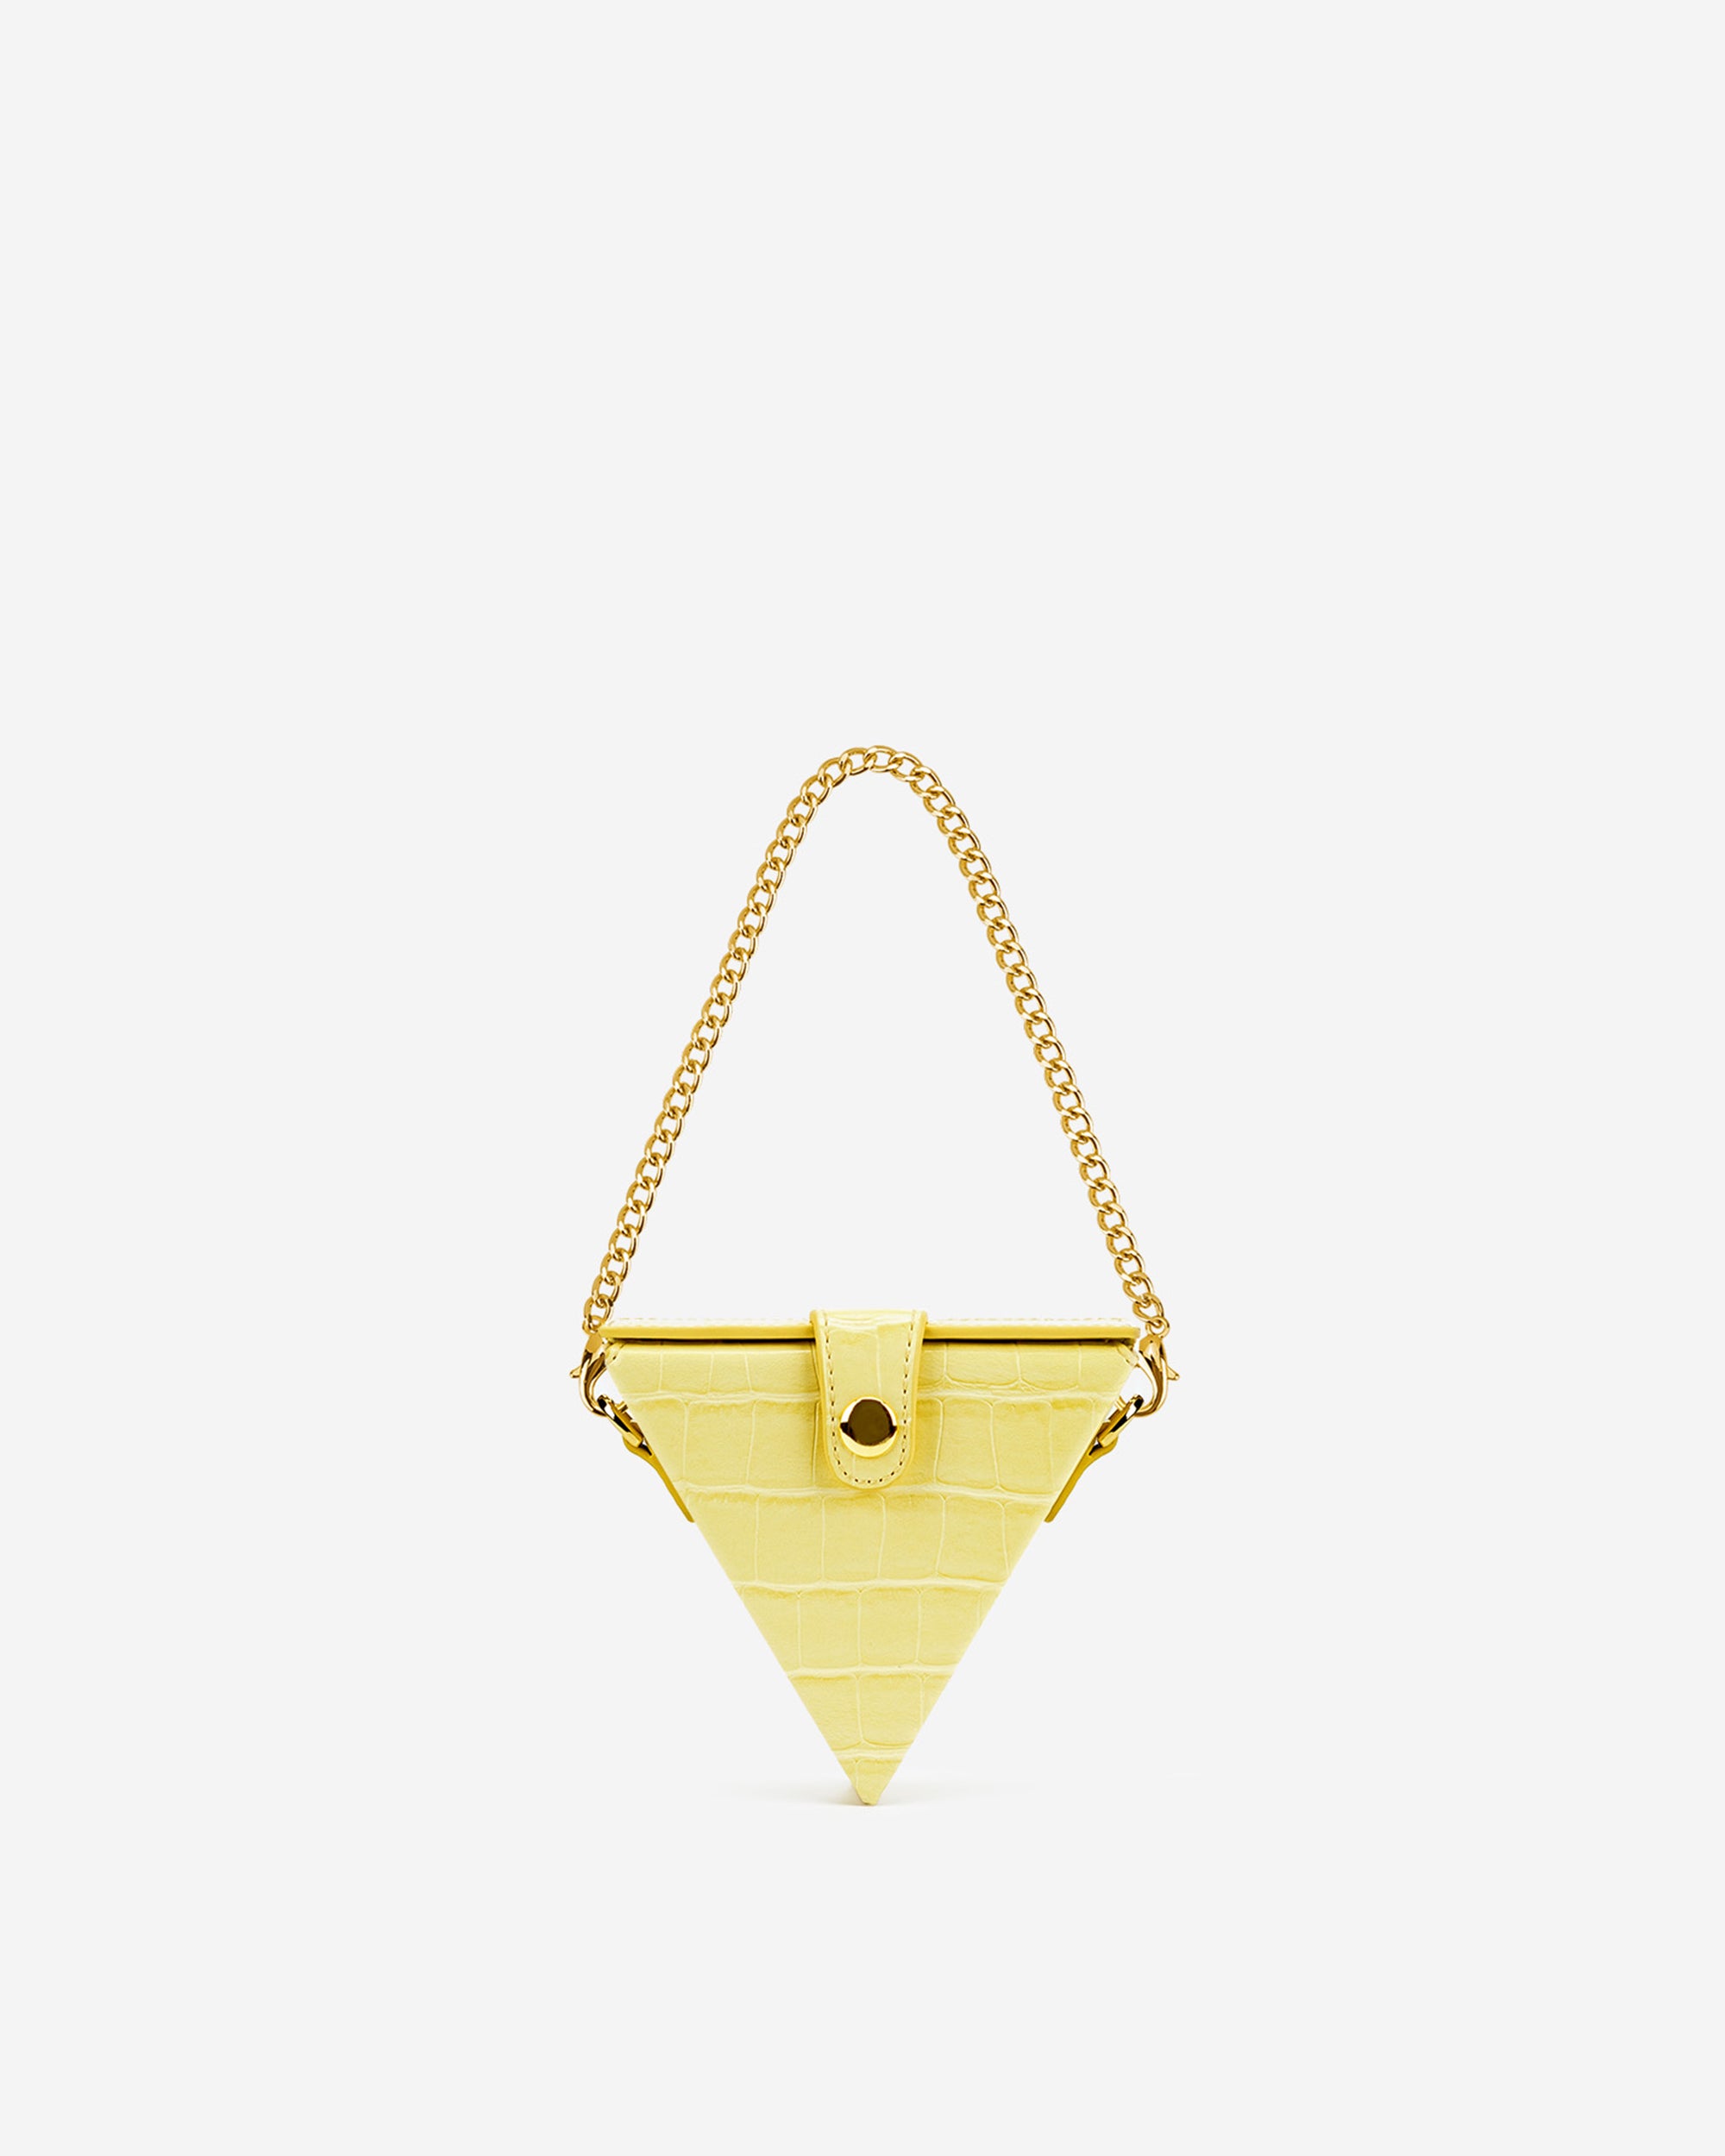 Triangle mini 박스 - 연노랑 악어무늬